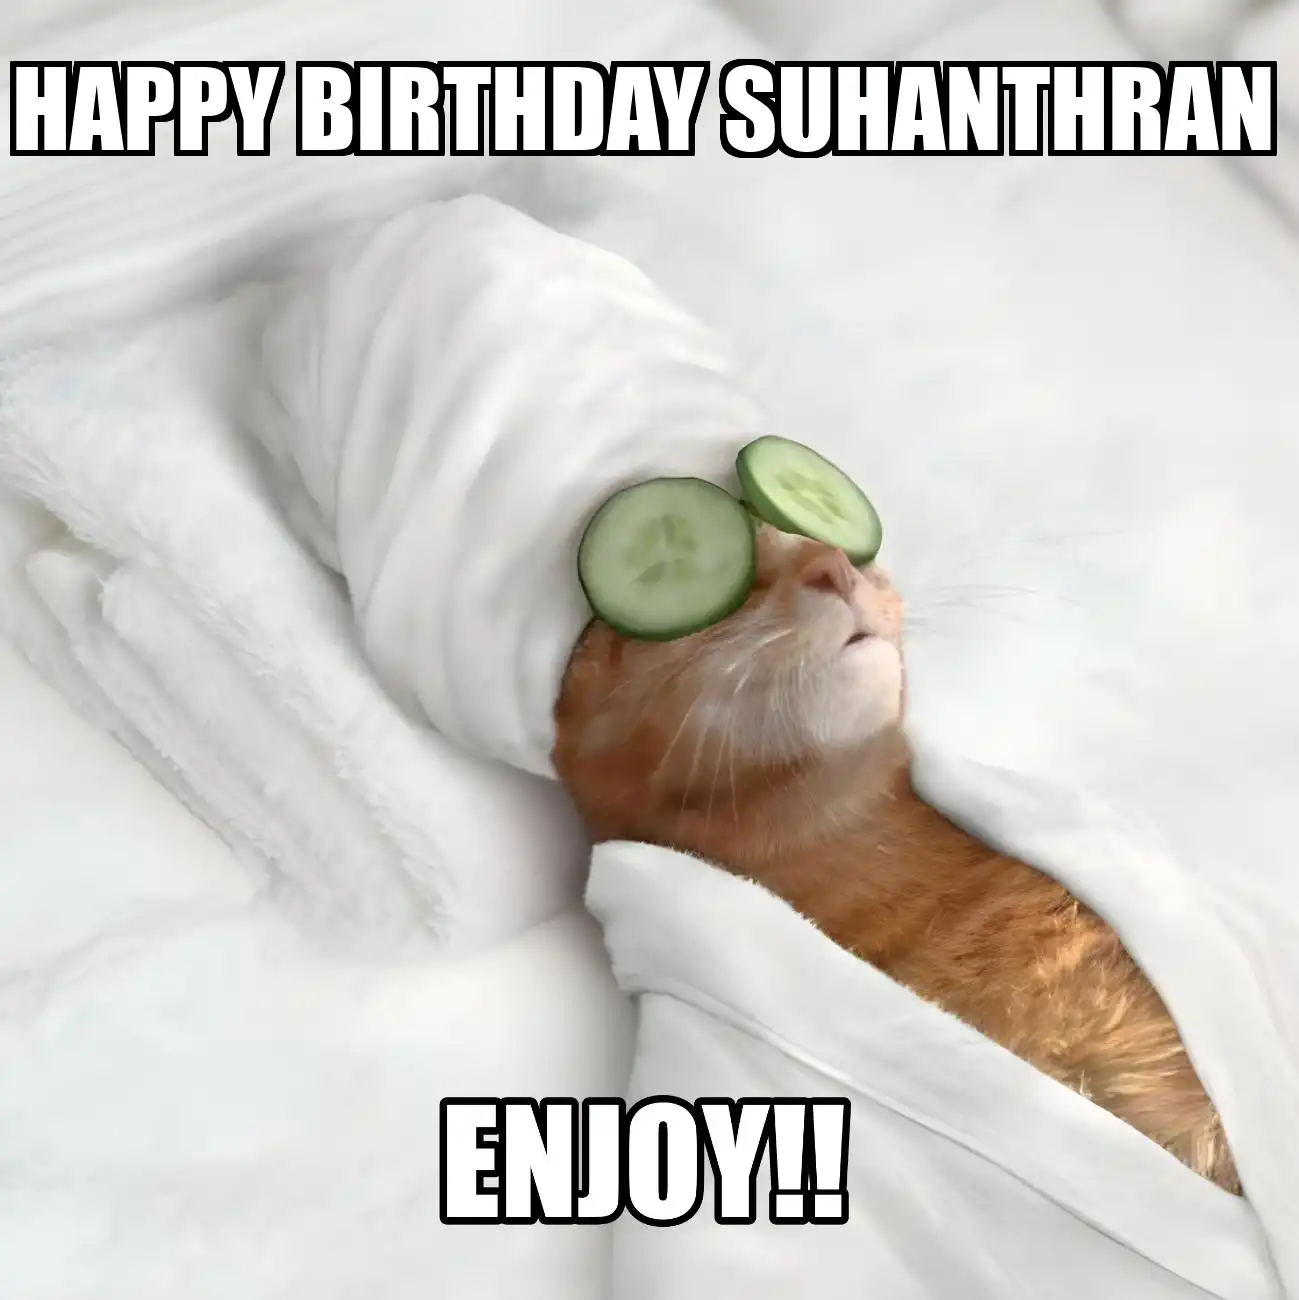 Happy Birthday Suhanthran Enjoy Cat Meme